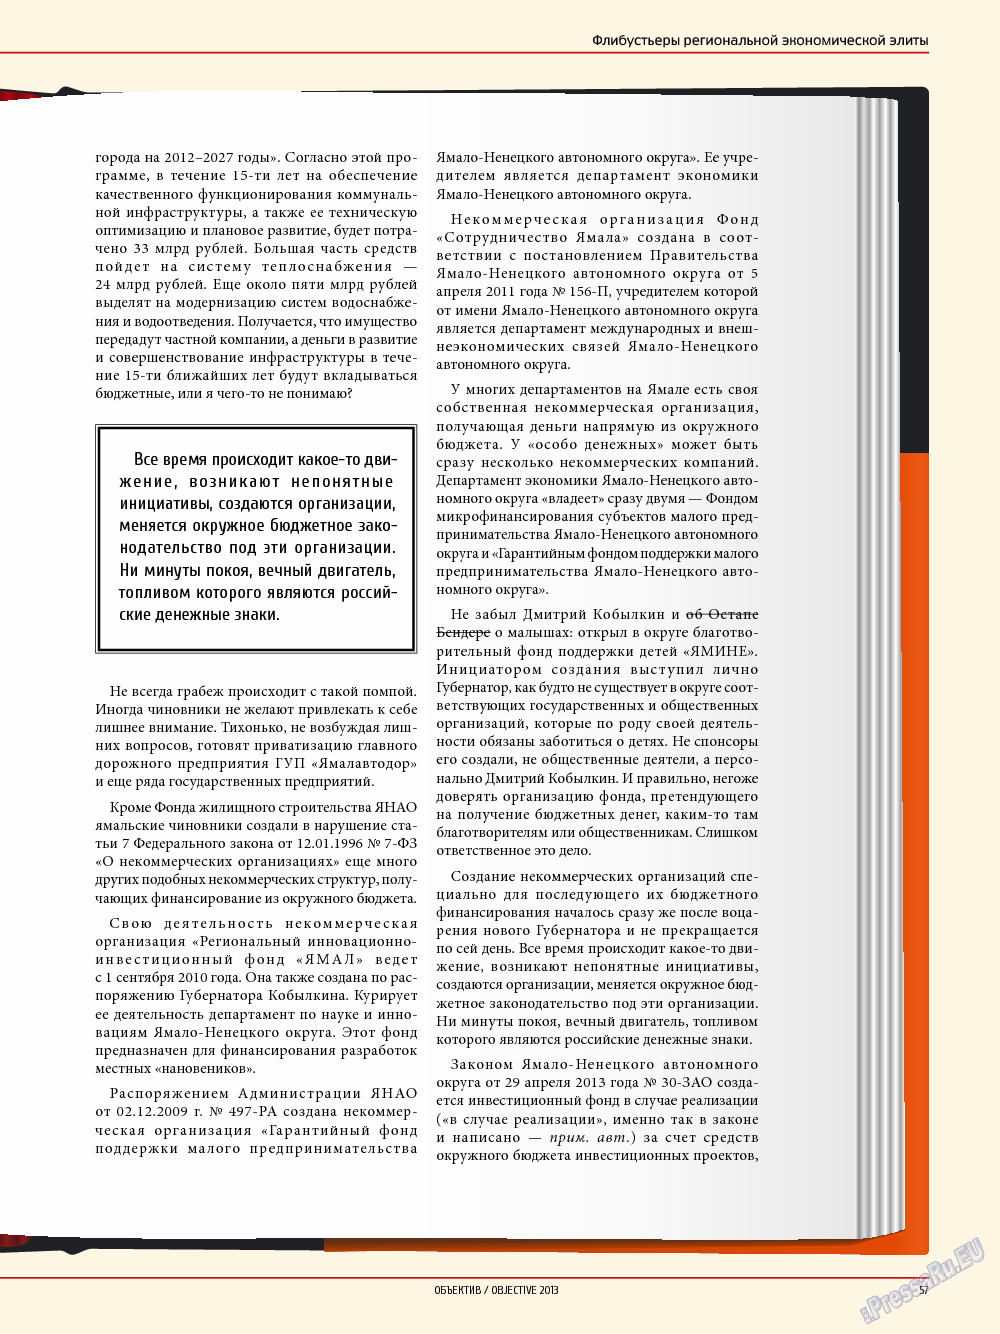 Объектив EU, журнал. 2013 №5 стр.57